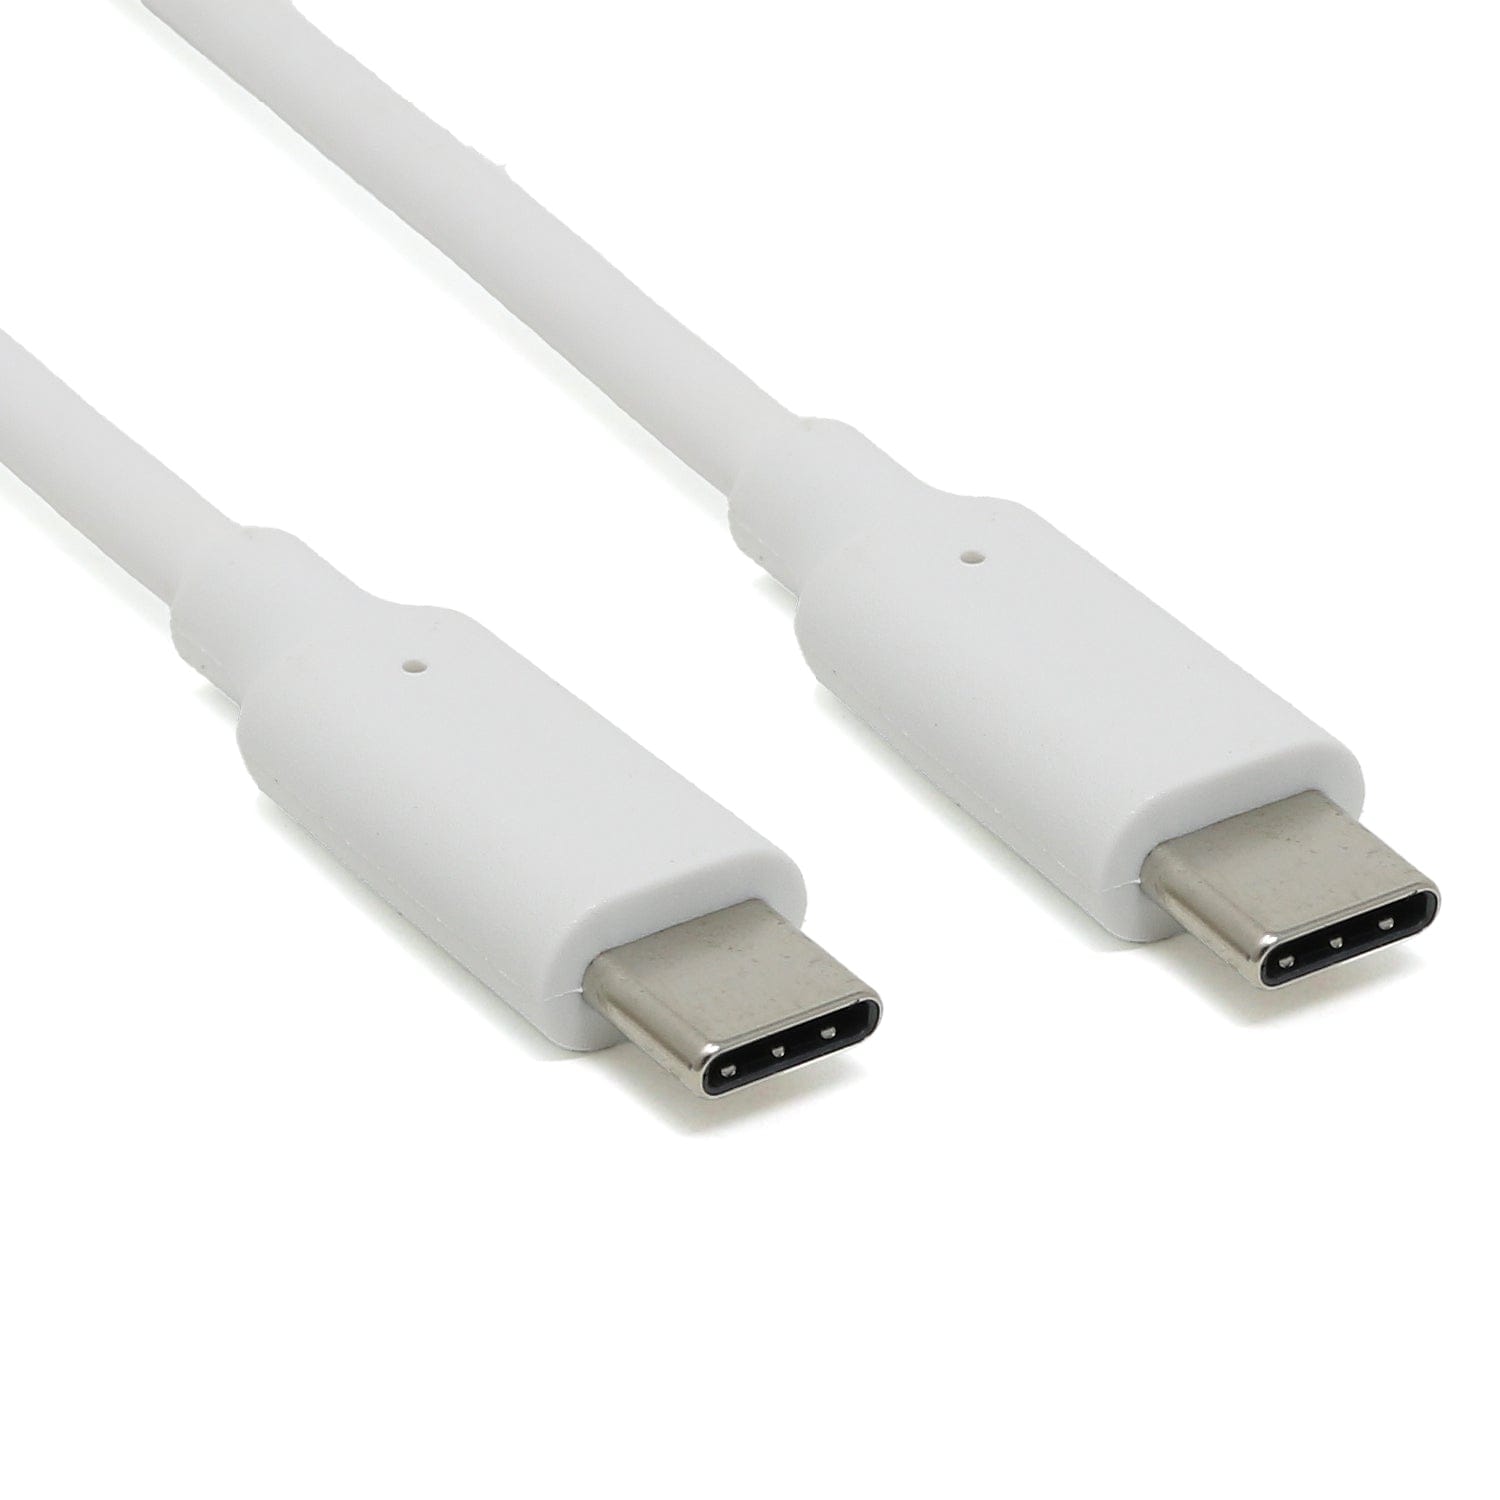 USB-C to USB-C Cable - White - The Pi Hut